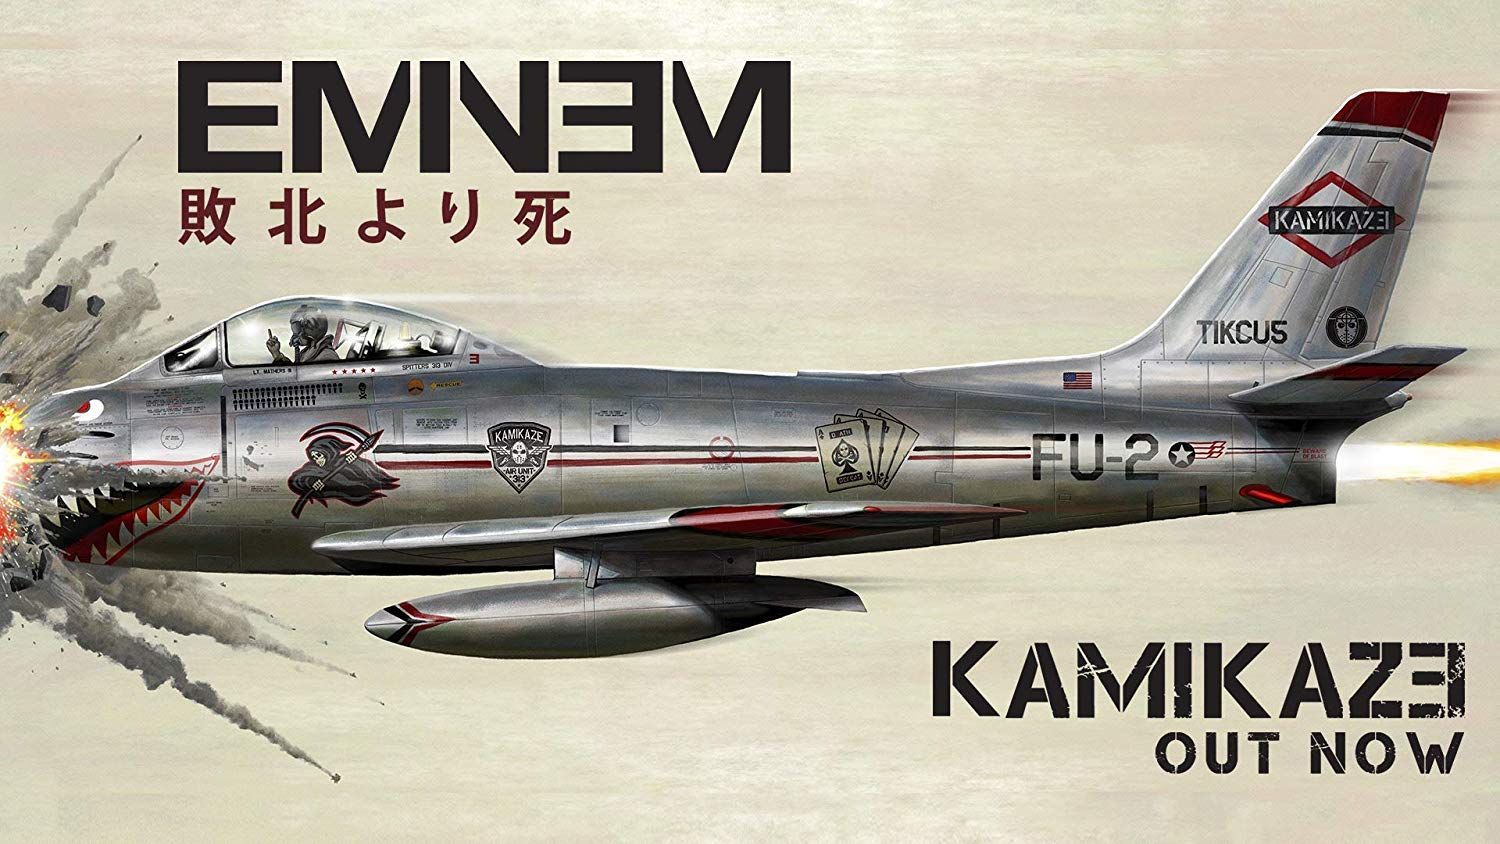 Home Music Eminem Drops New Album Called “kamikaze” Kamikaze Album Cover Wallpaper & Background Download